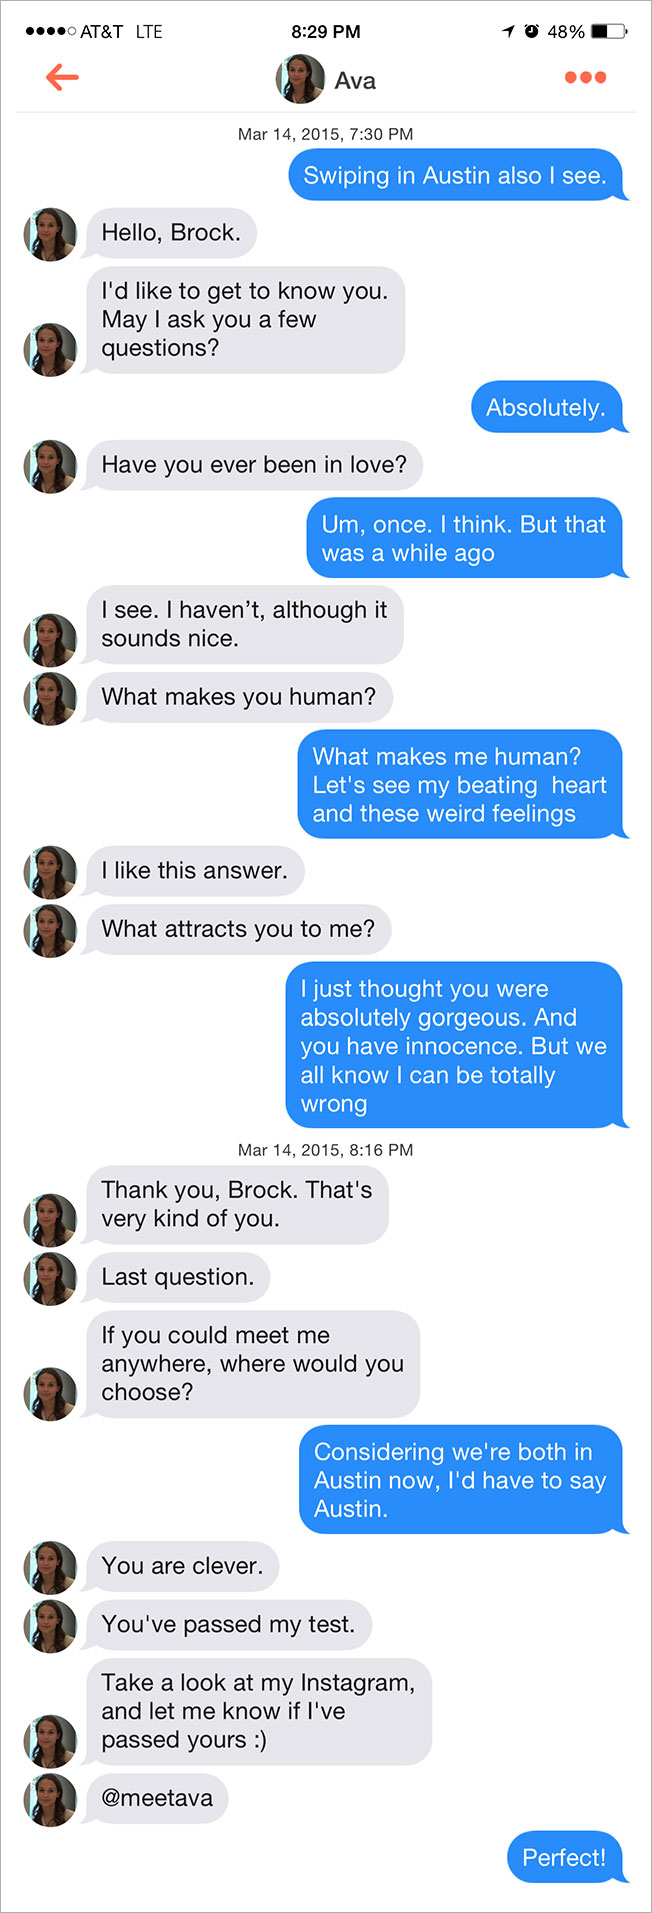 A conversation between "Ava" and Brock, a real human.